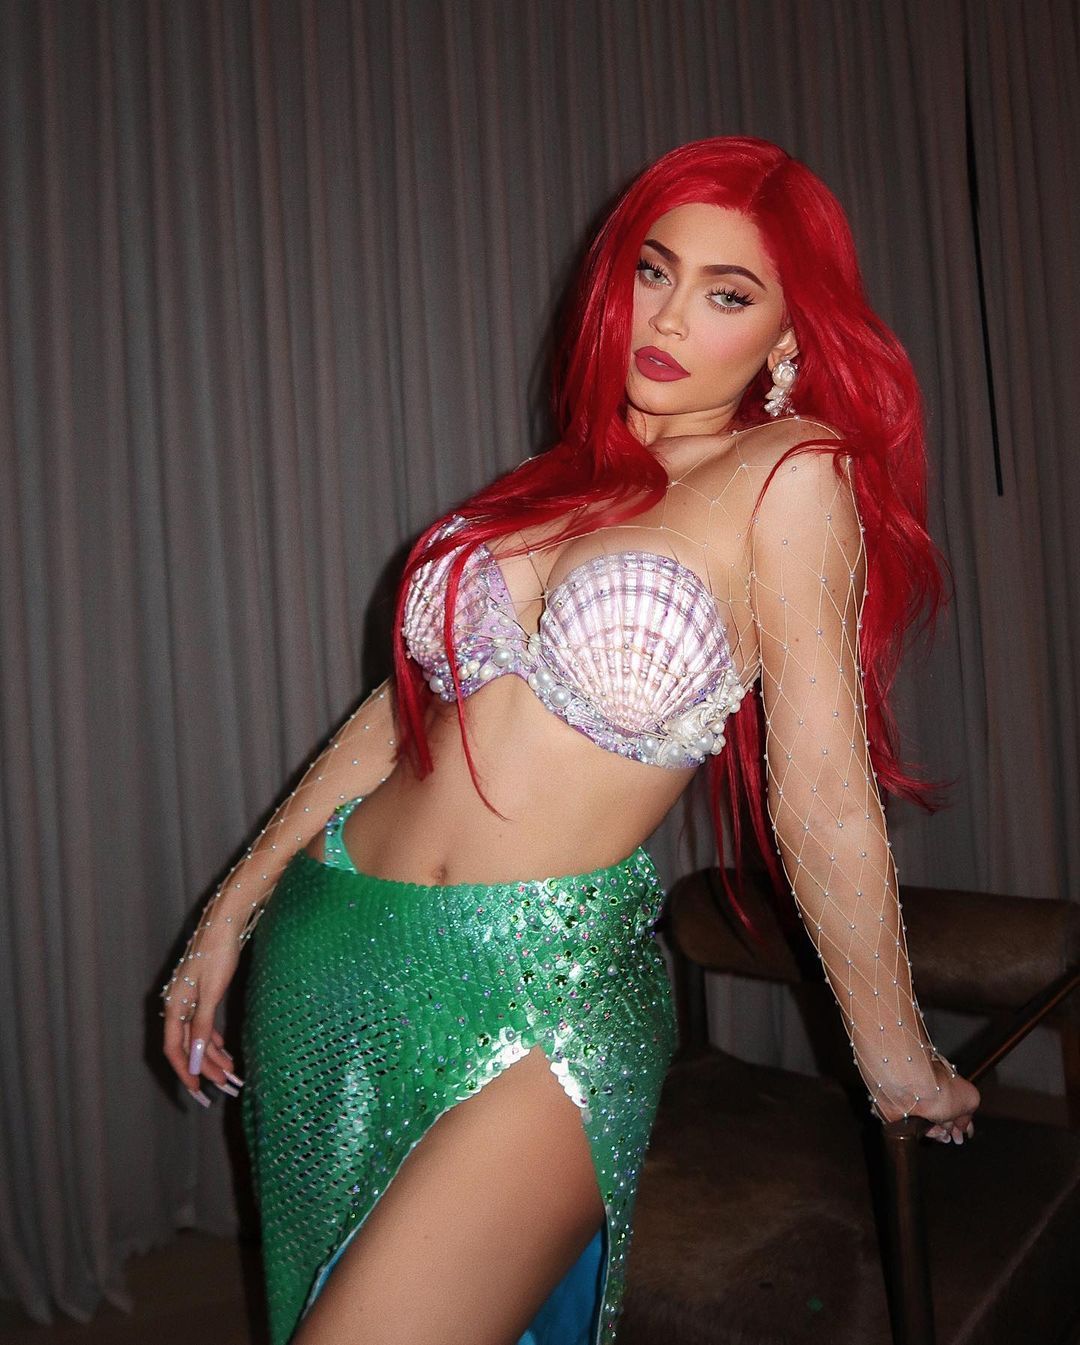 Mermaid Makeup Costume Kit